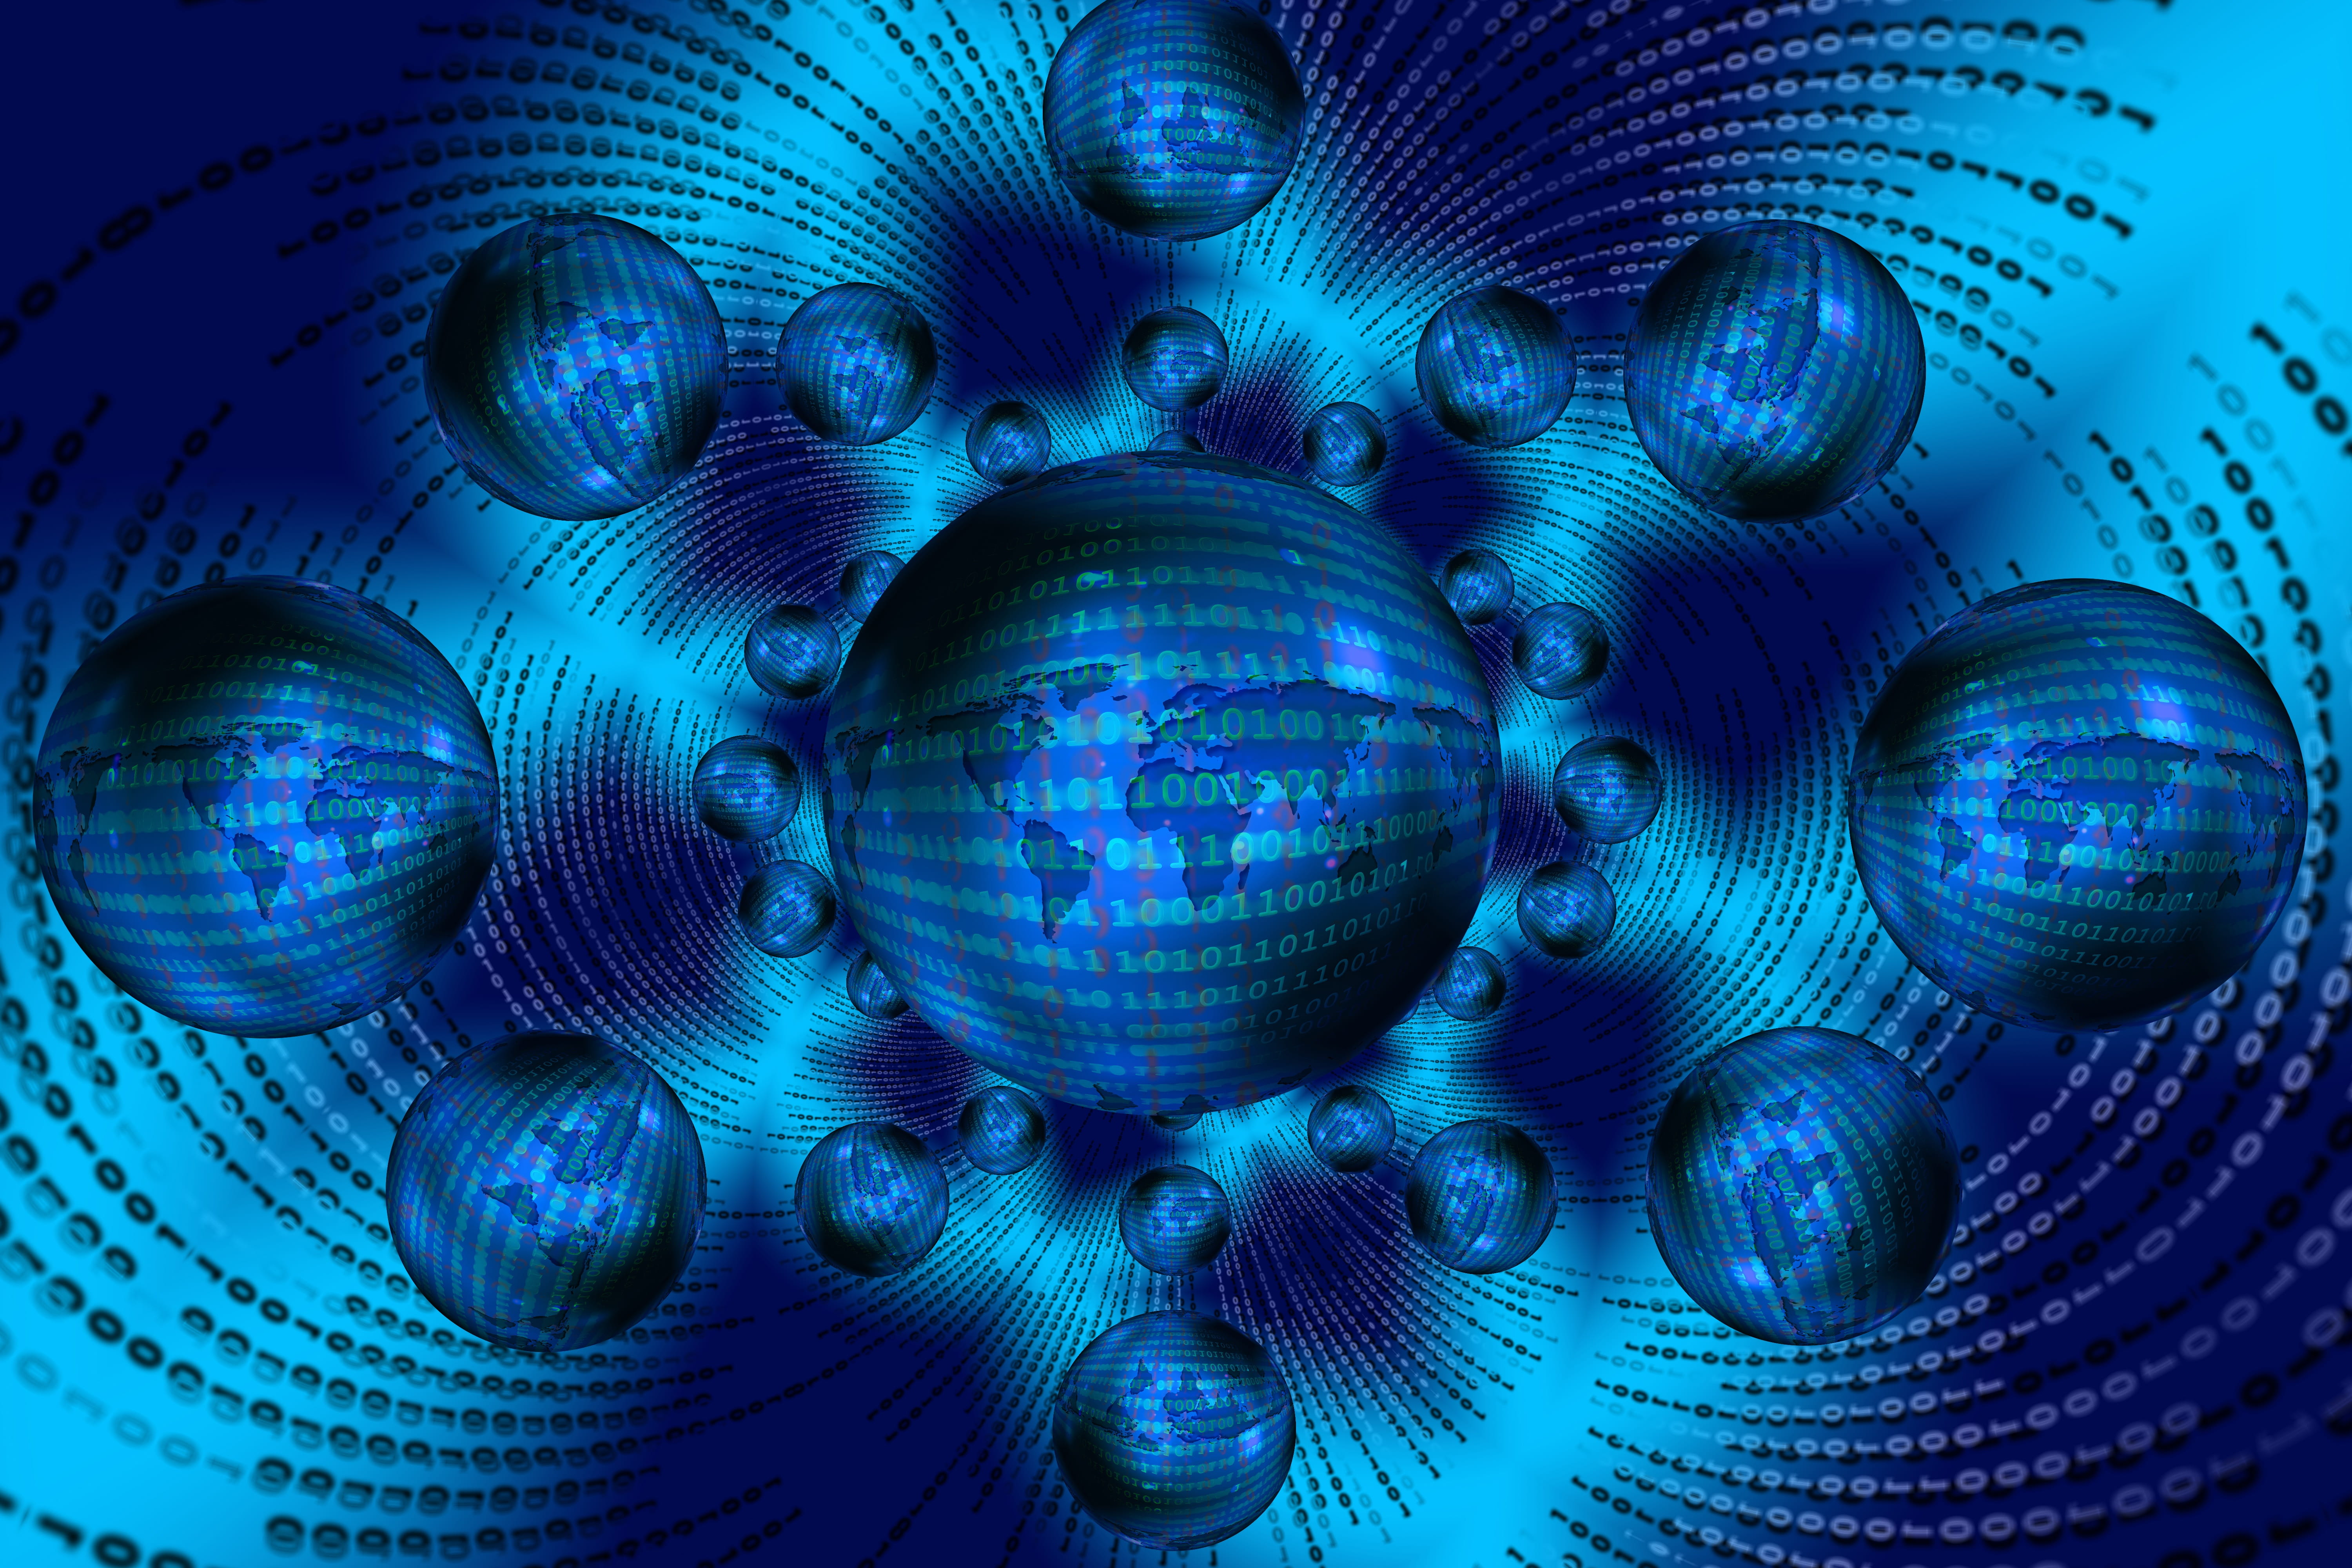 blue and teal digital wallpaper, Binary Code, Ball, Http, Www